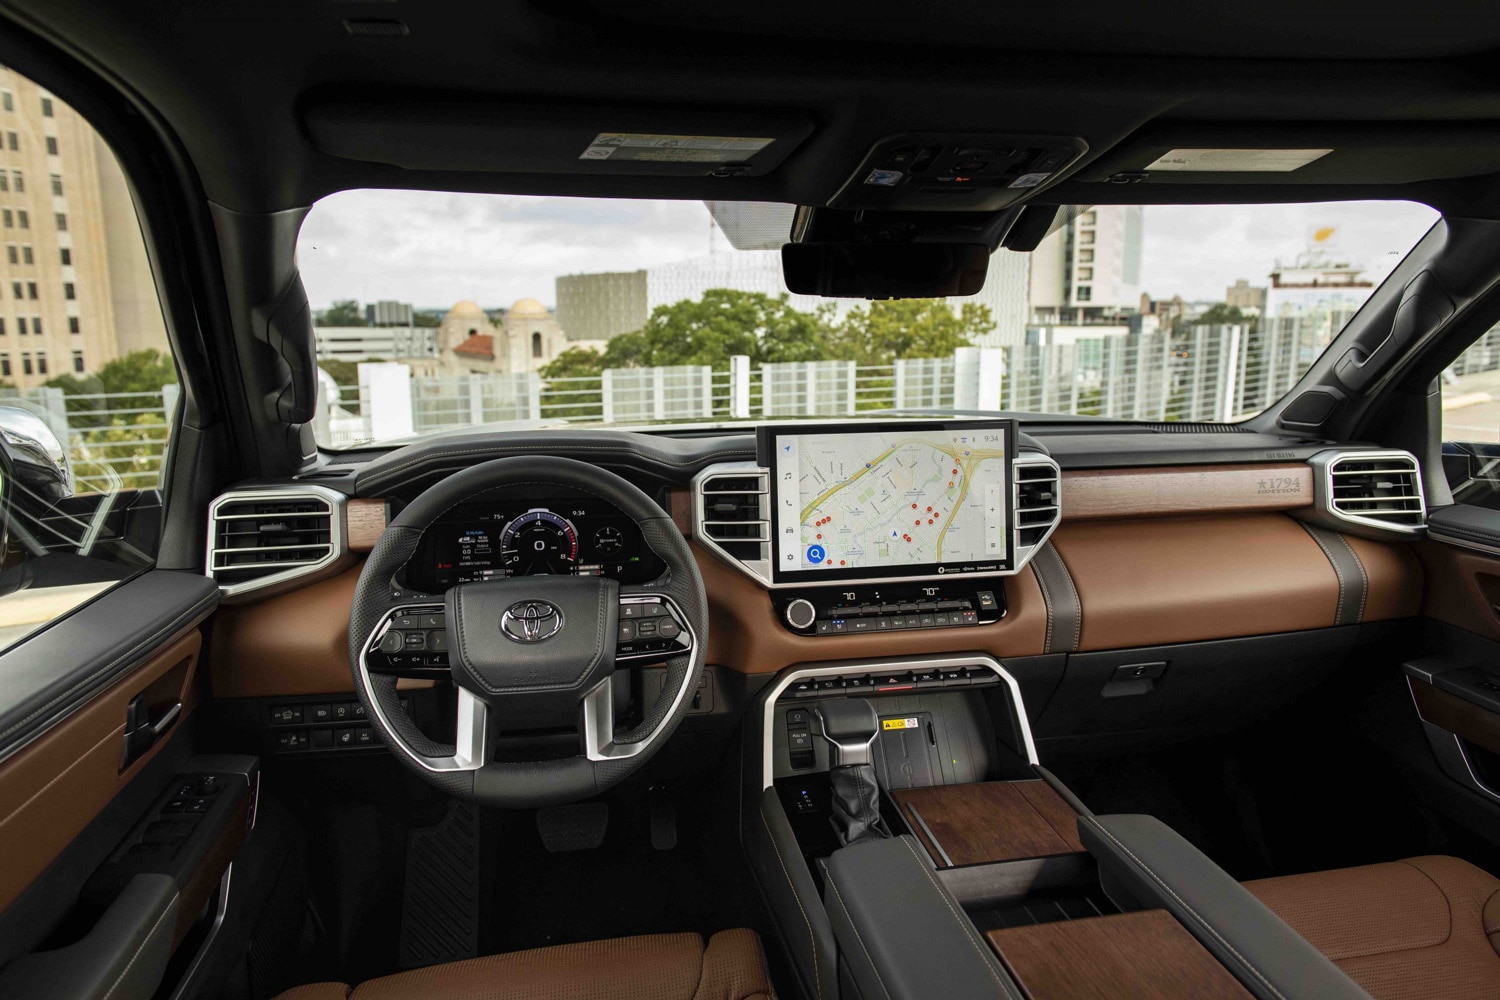 2023 Toyota Tundra interior and infotainment screen